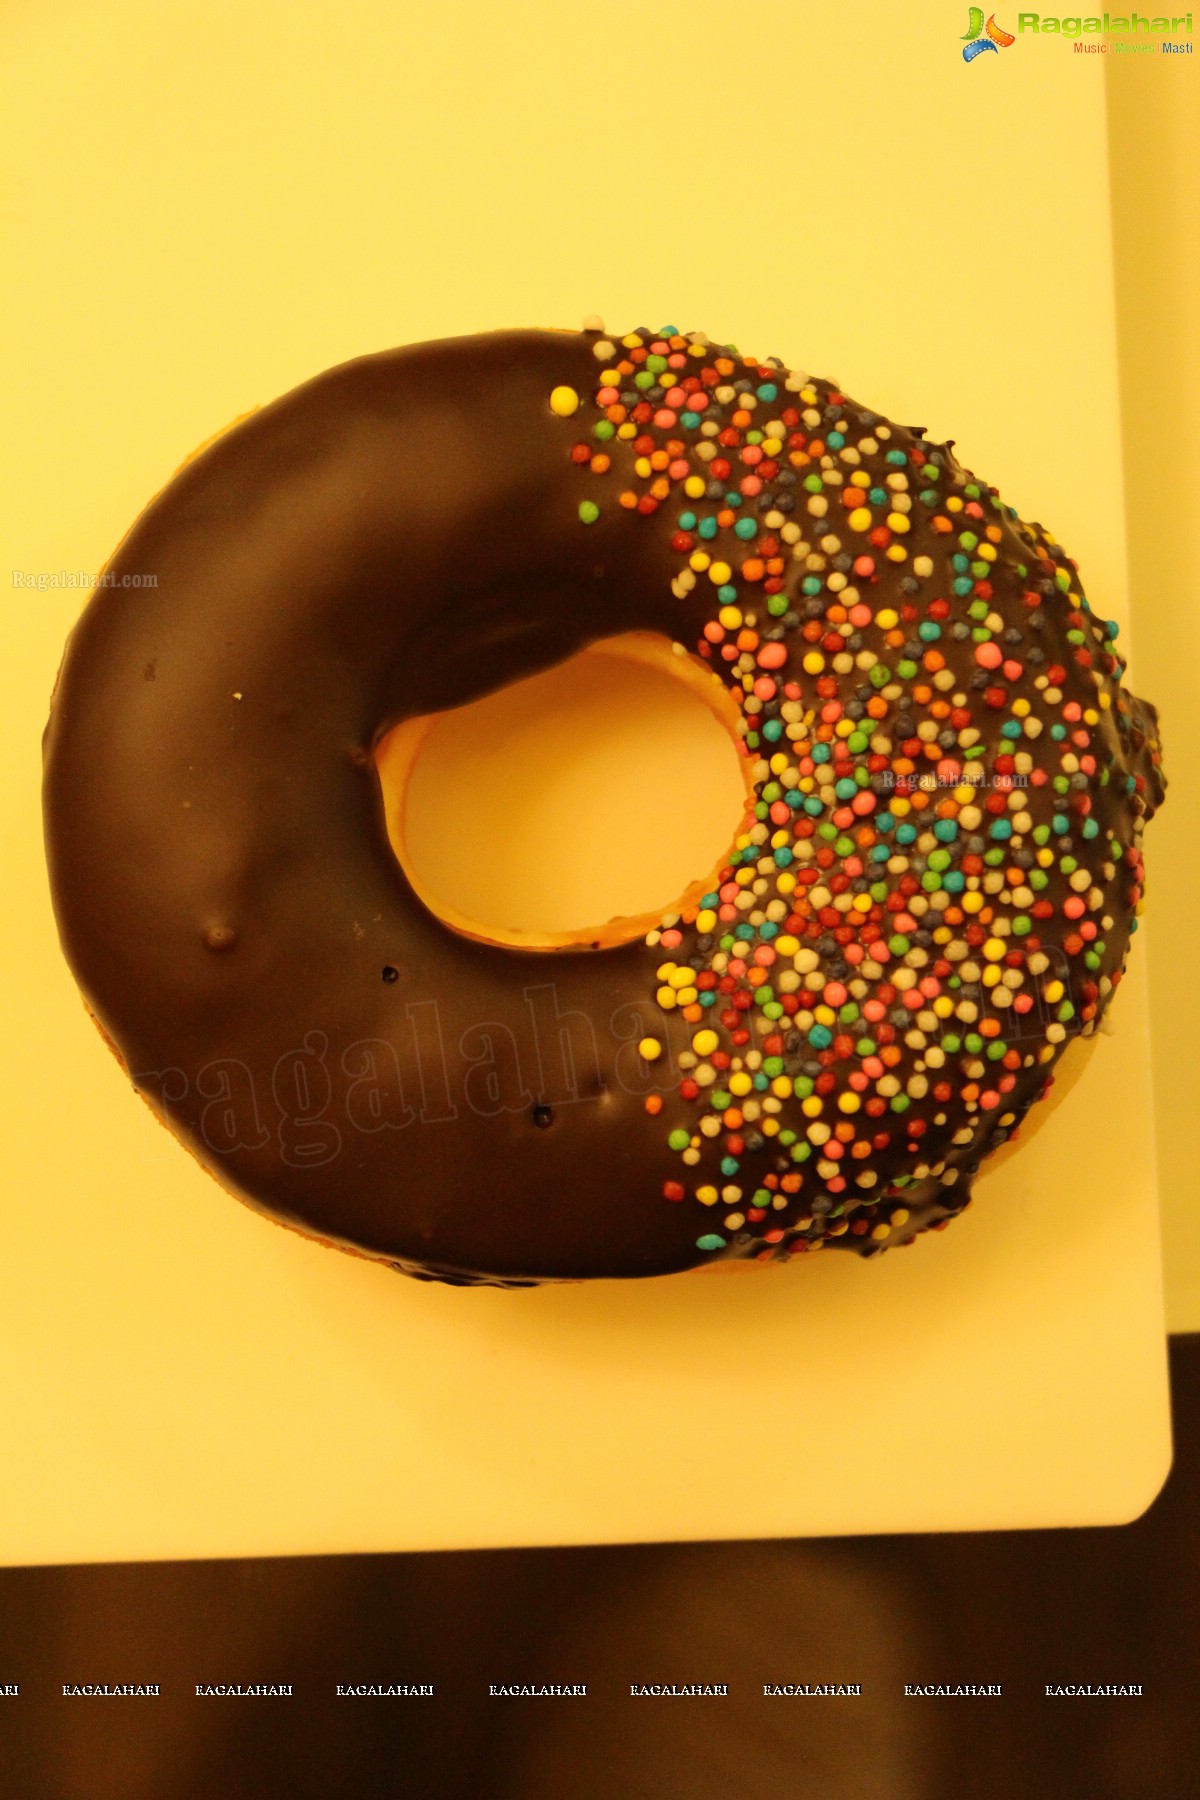 Naveen Chandra and Ritu Varma launches Donut House, Hyderabad